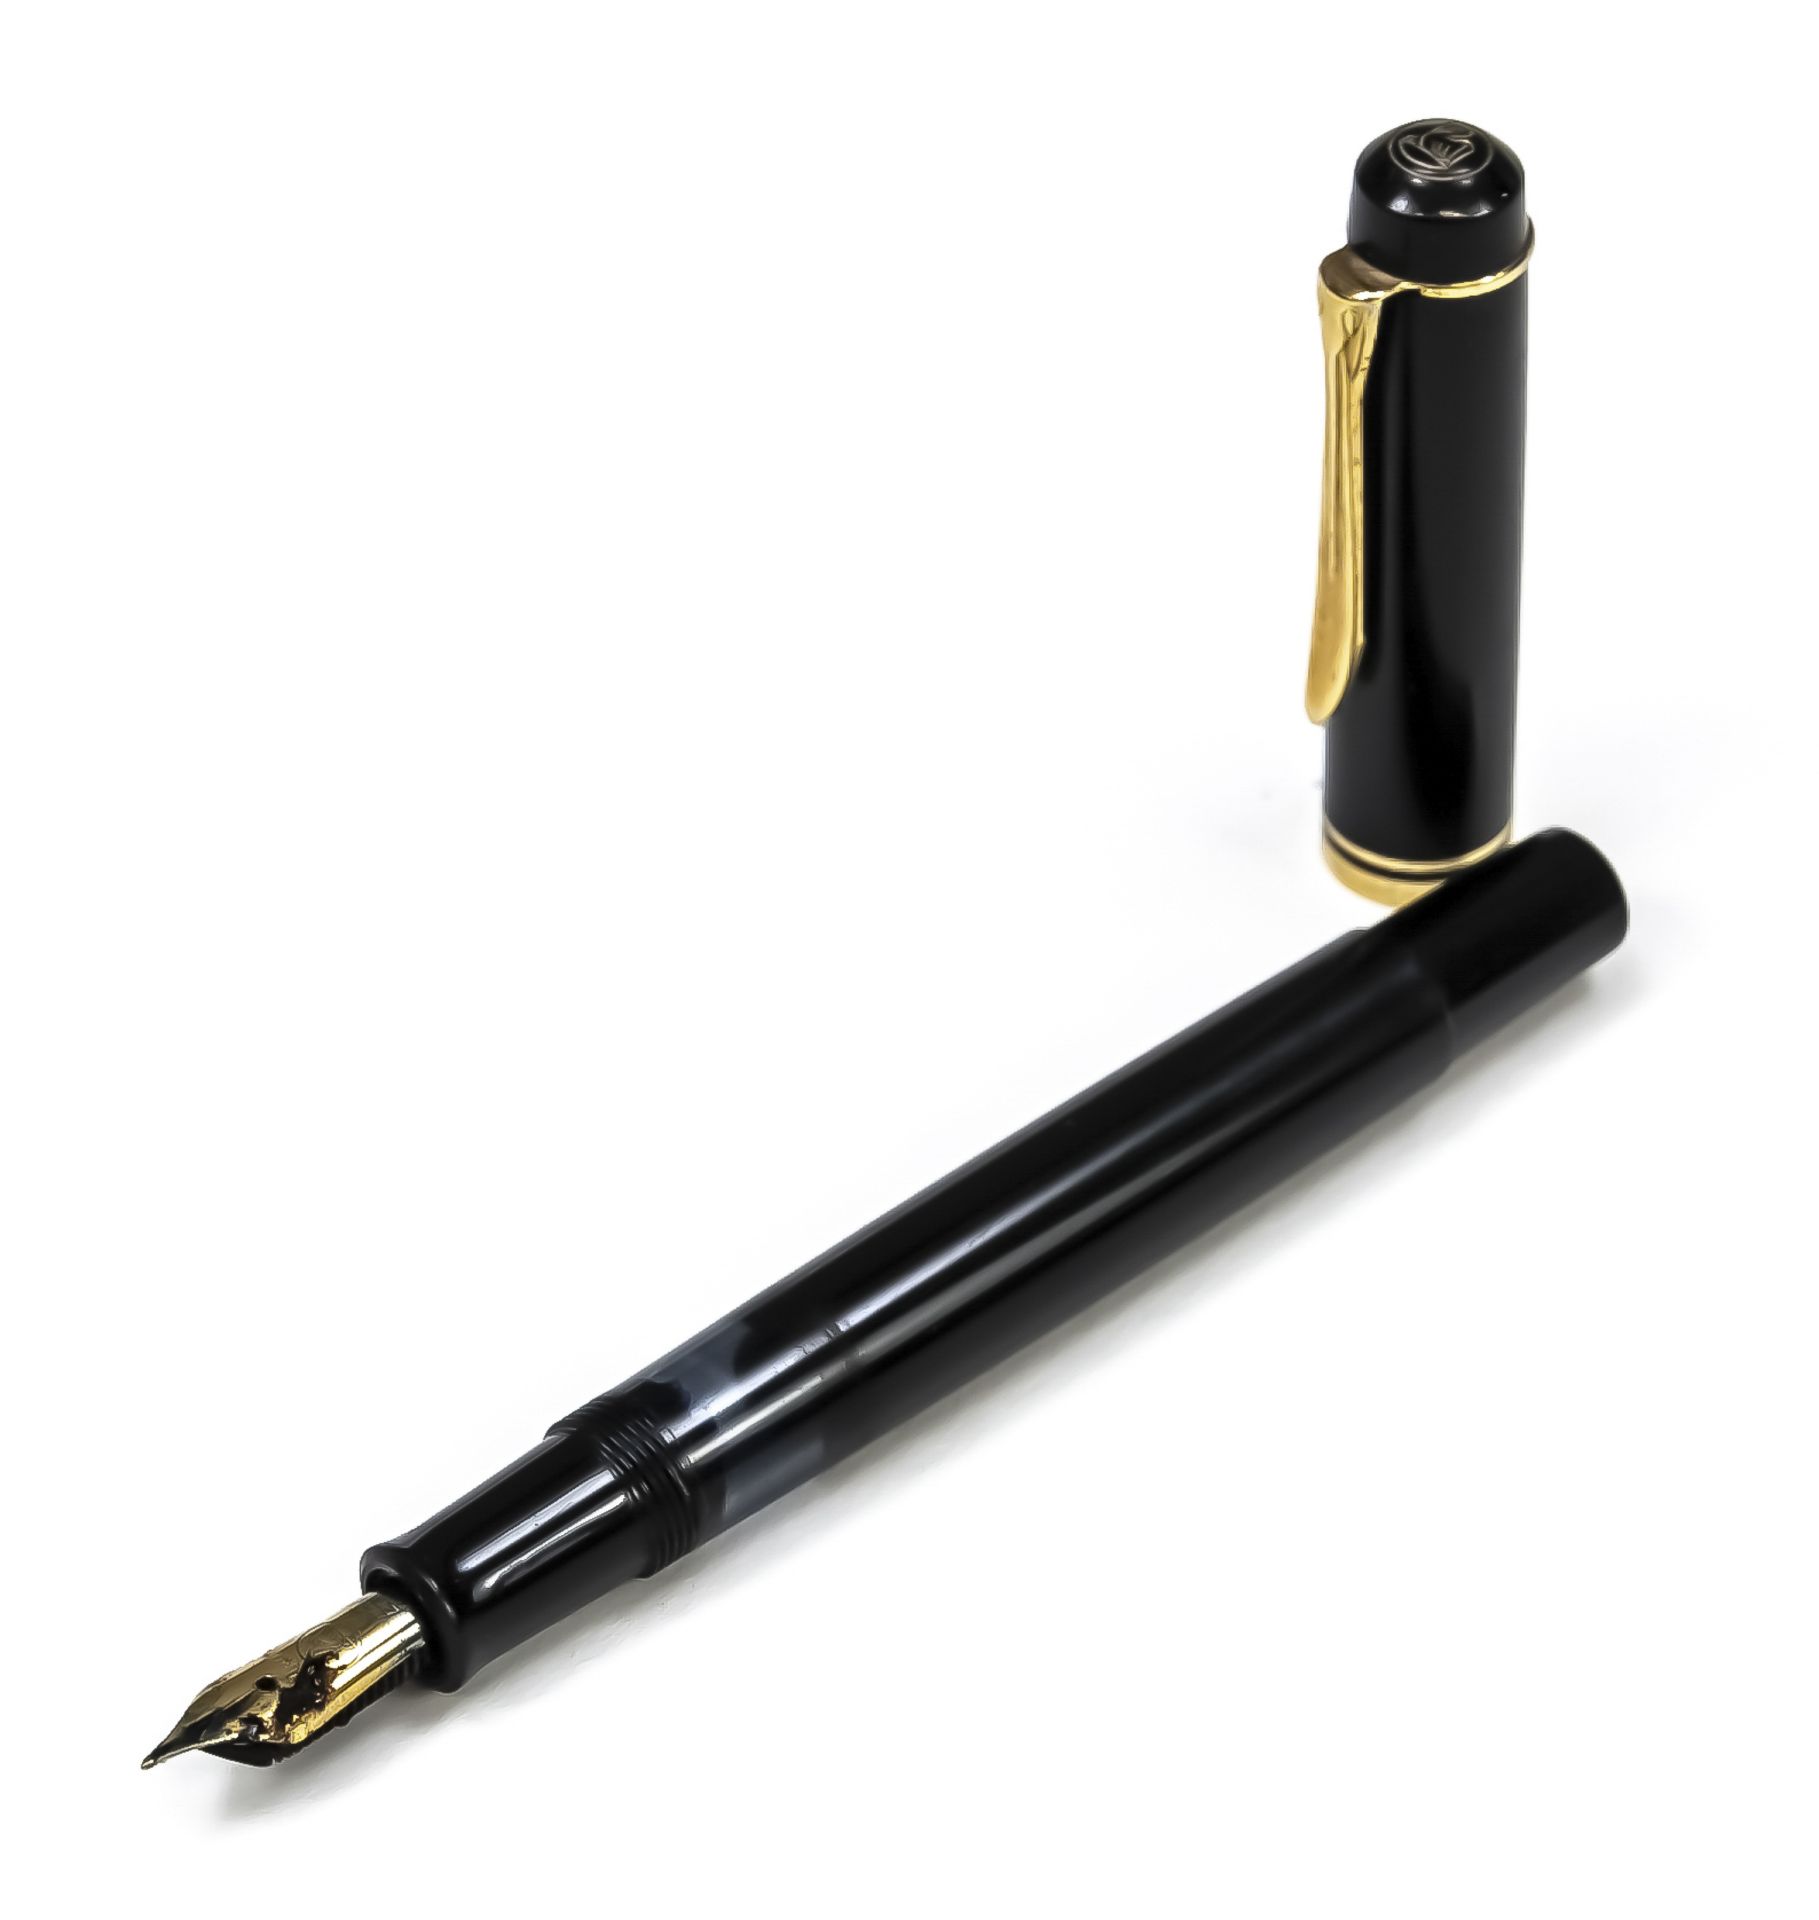 Pelikan piston fountain pen, 2nd half of 20th century, gilded nib, black casing, gilded